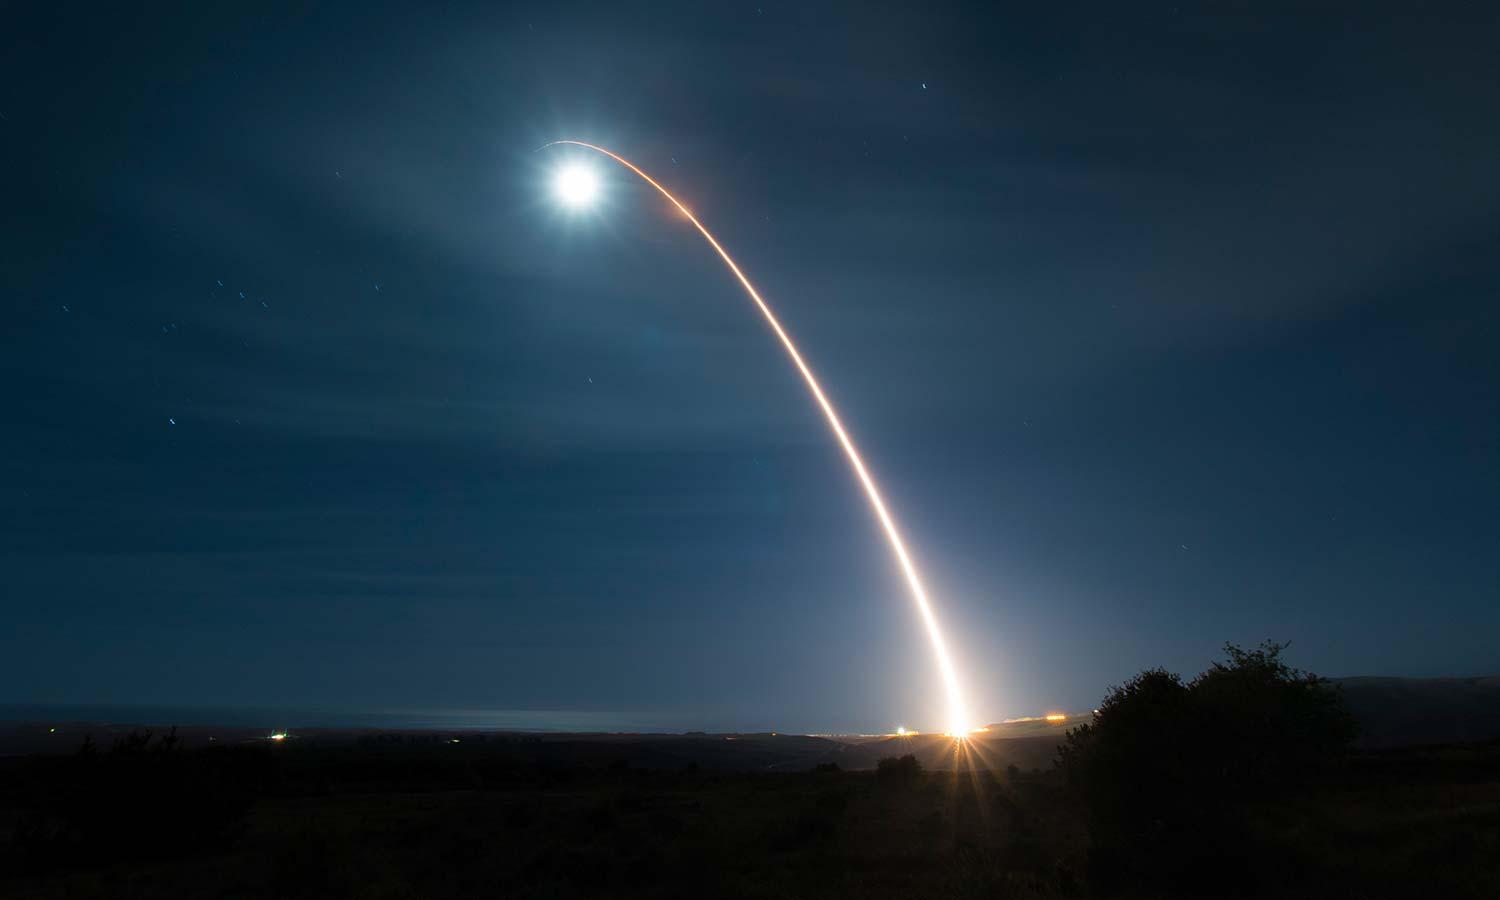 unarmed Minuteman III intercontinental ballistic missile test launch from Vandenberg Air Force Base, Calif. (